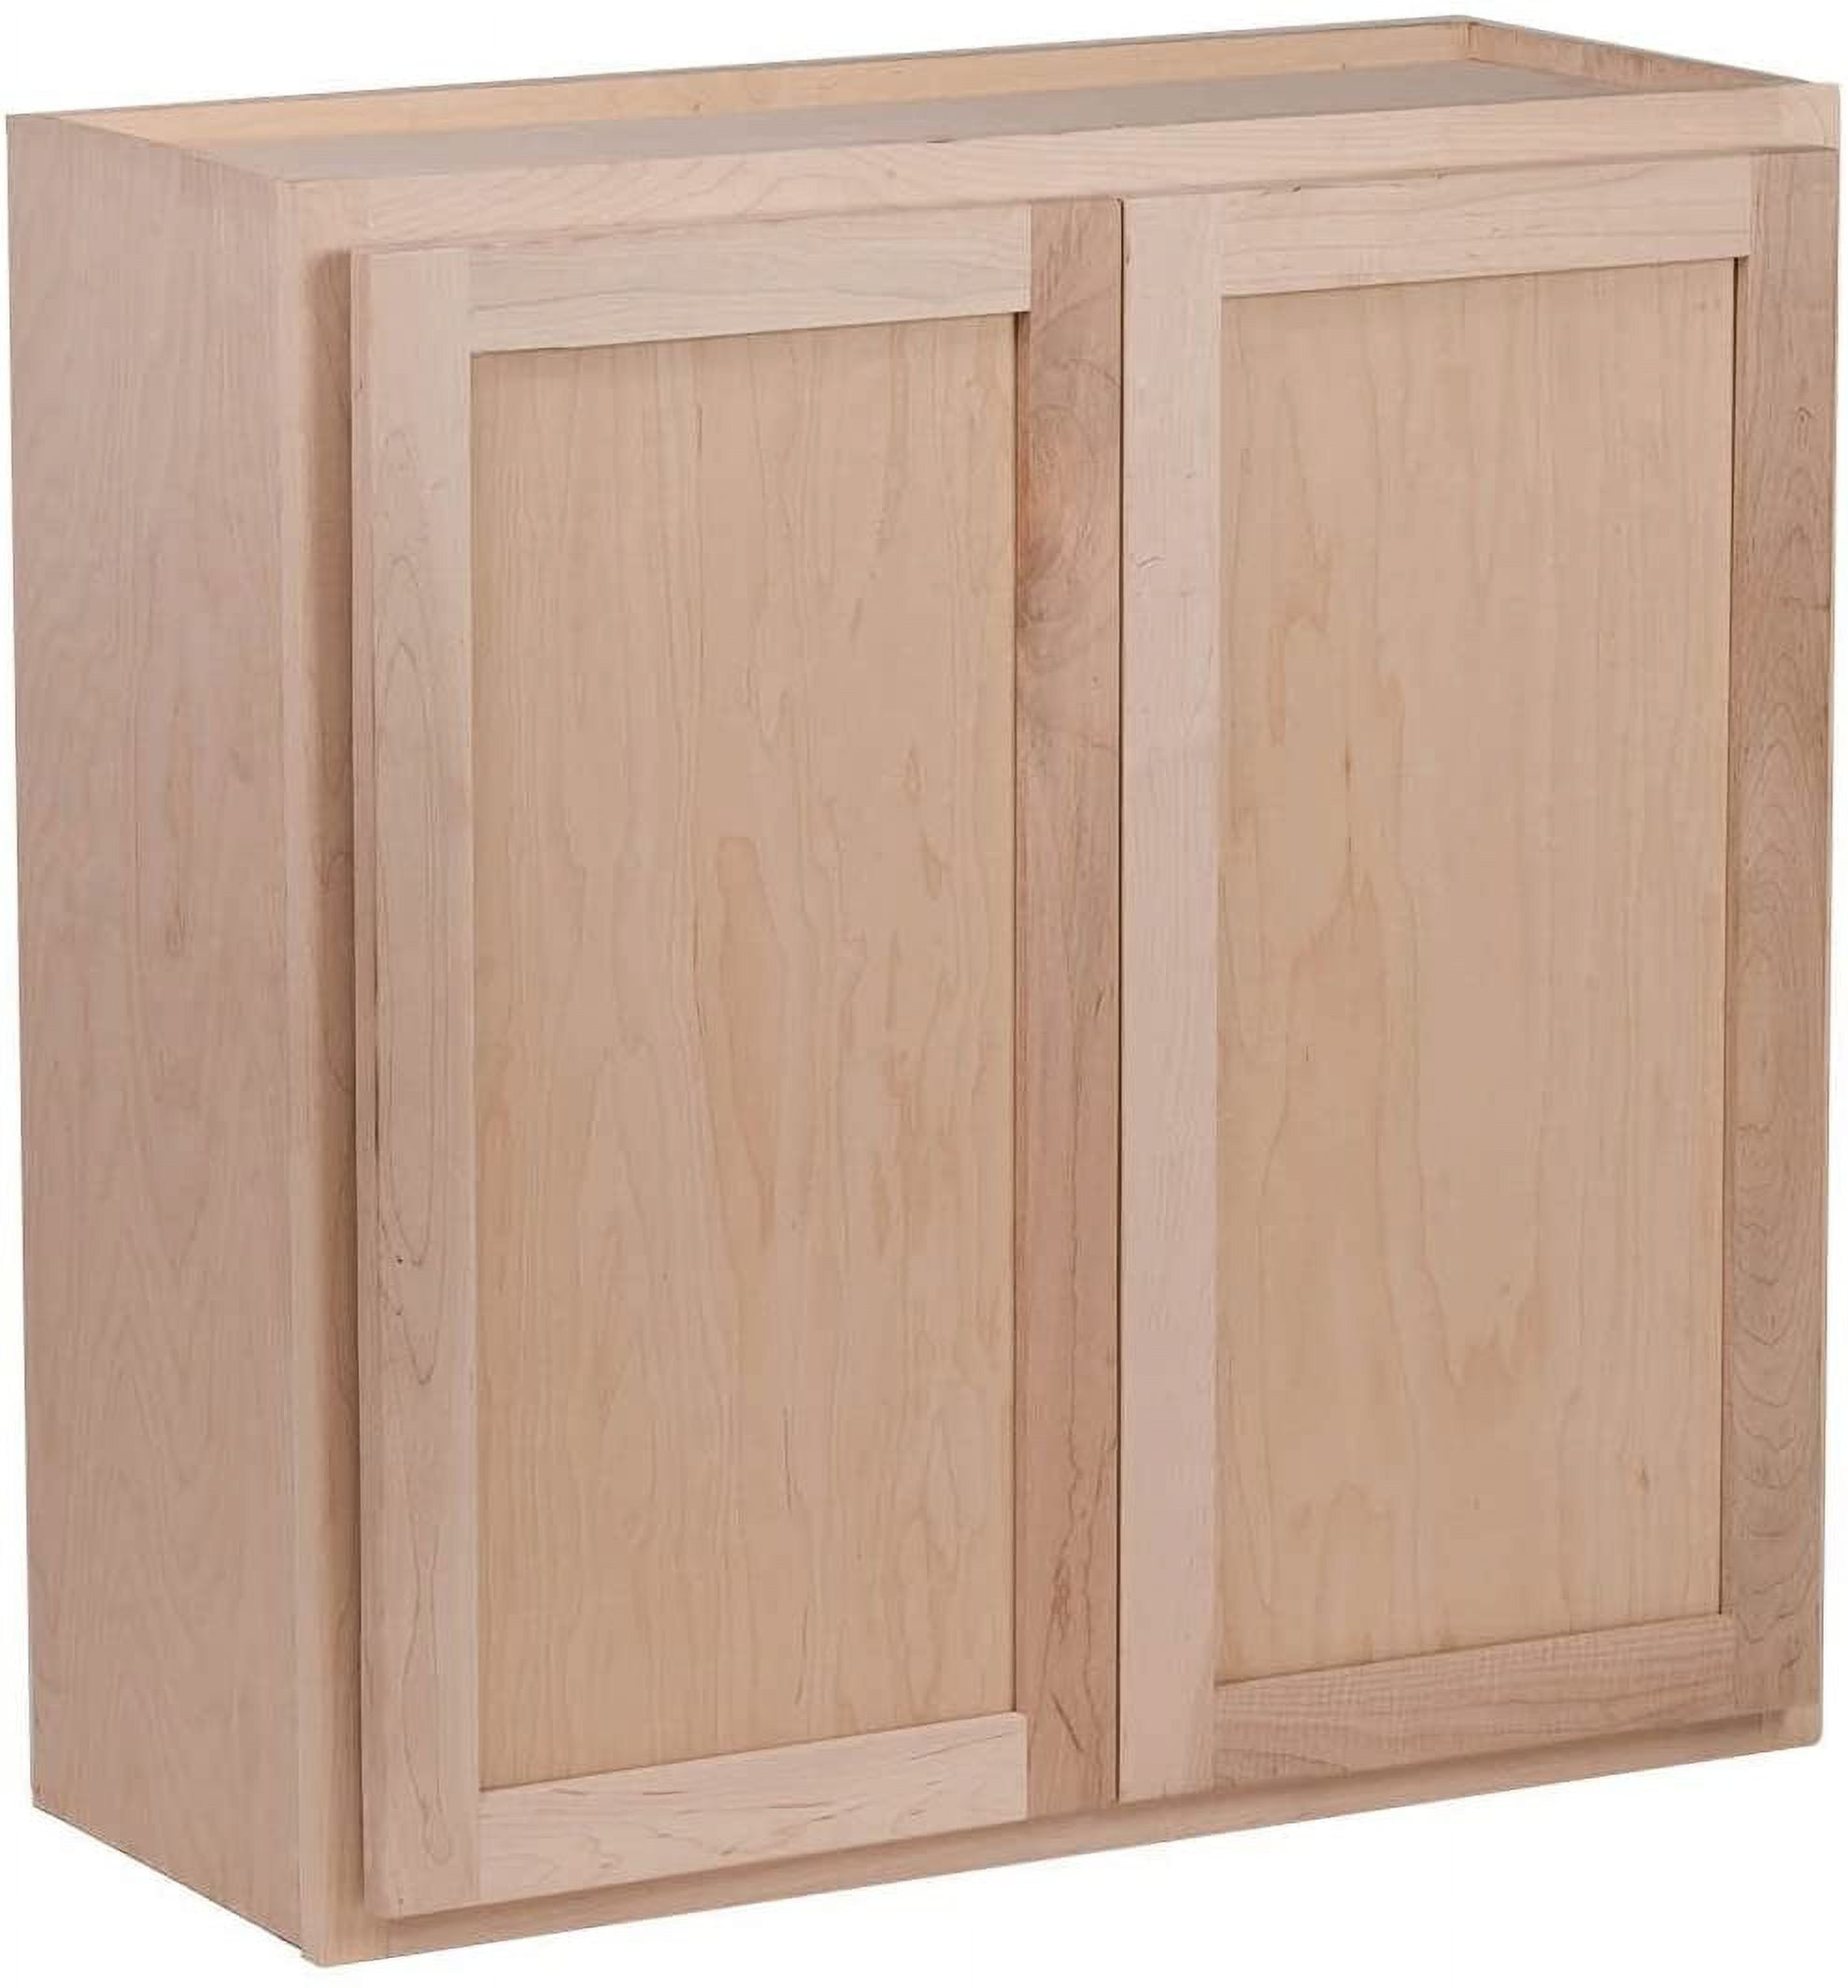  Quicklock RTA (Ready-to-Assemble) Cabinets, Kitchen Starter  Sets, Office Kitchenette, Small Home Kitchenette